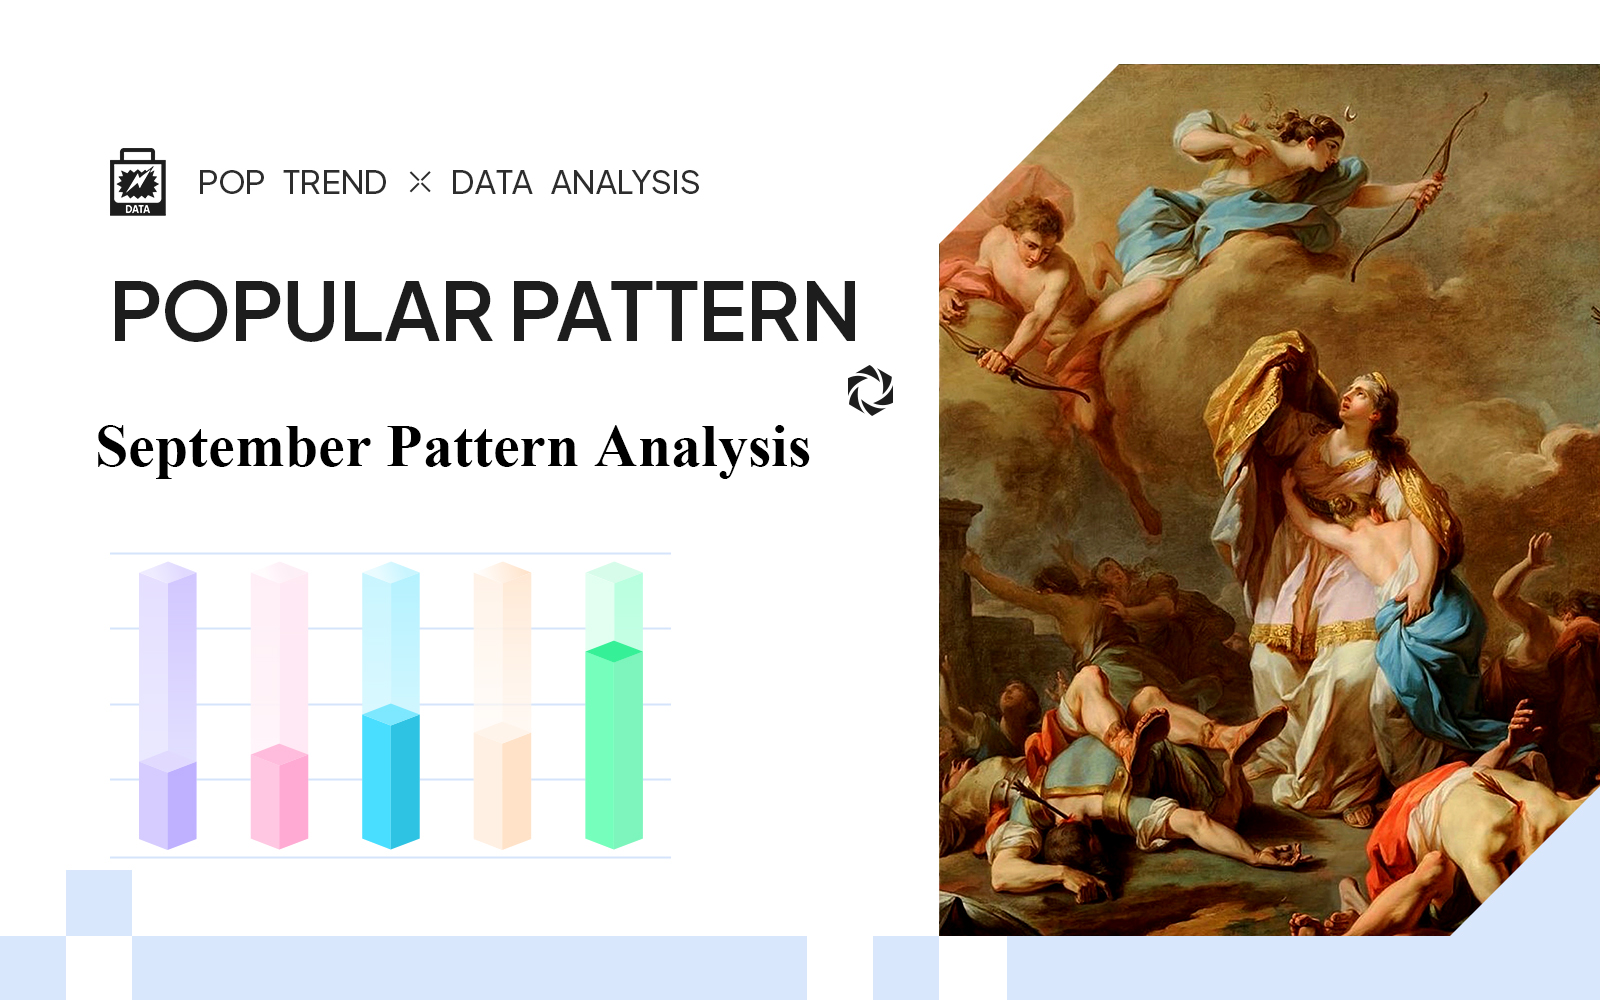 September -- The Analysis of Popular Patterns